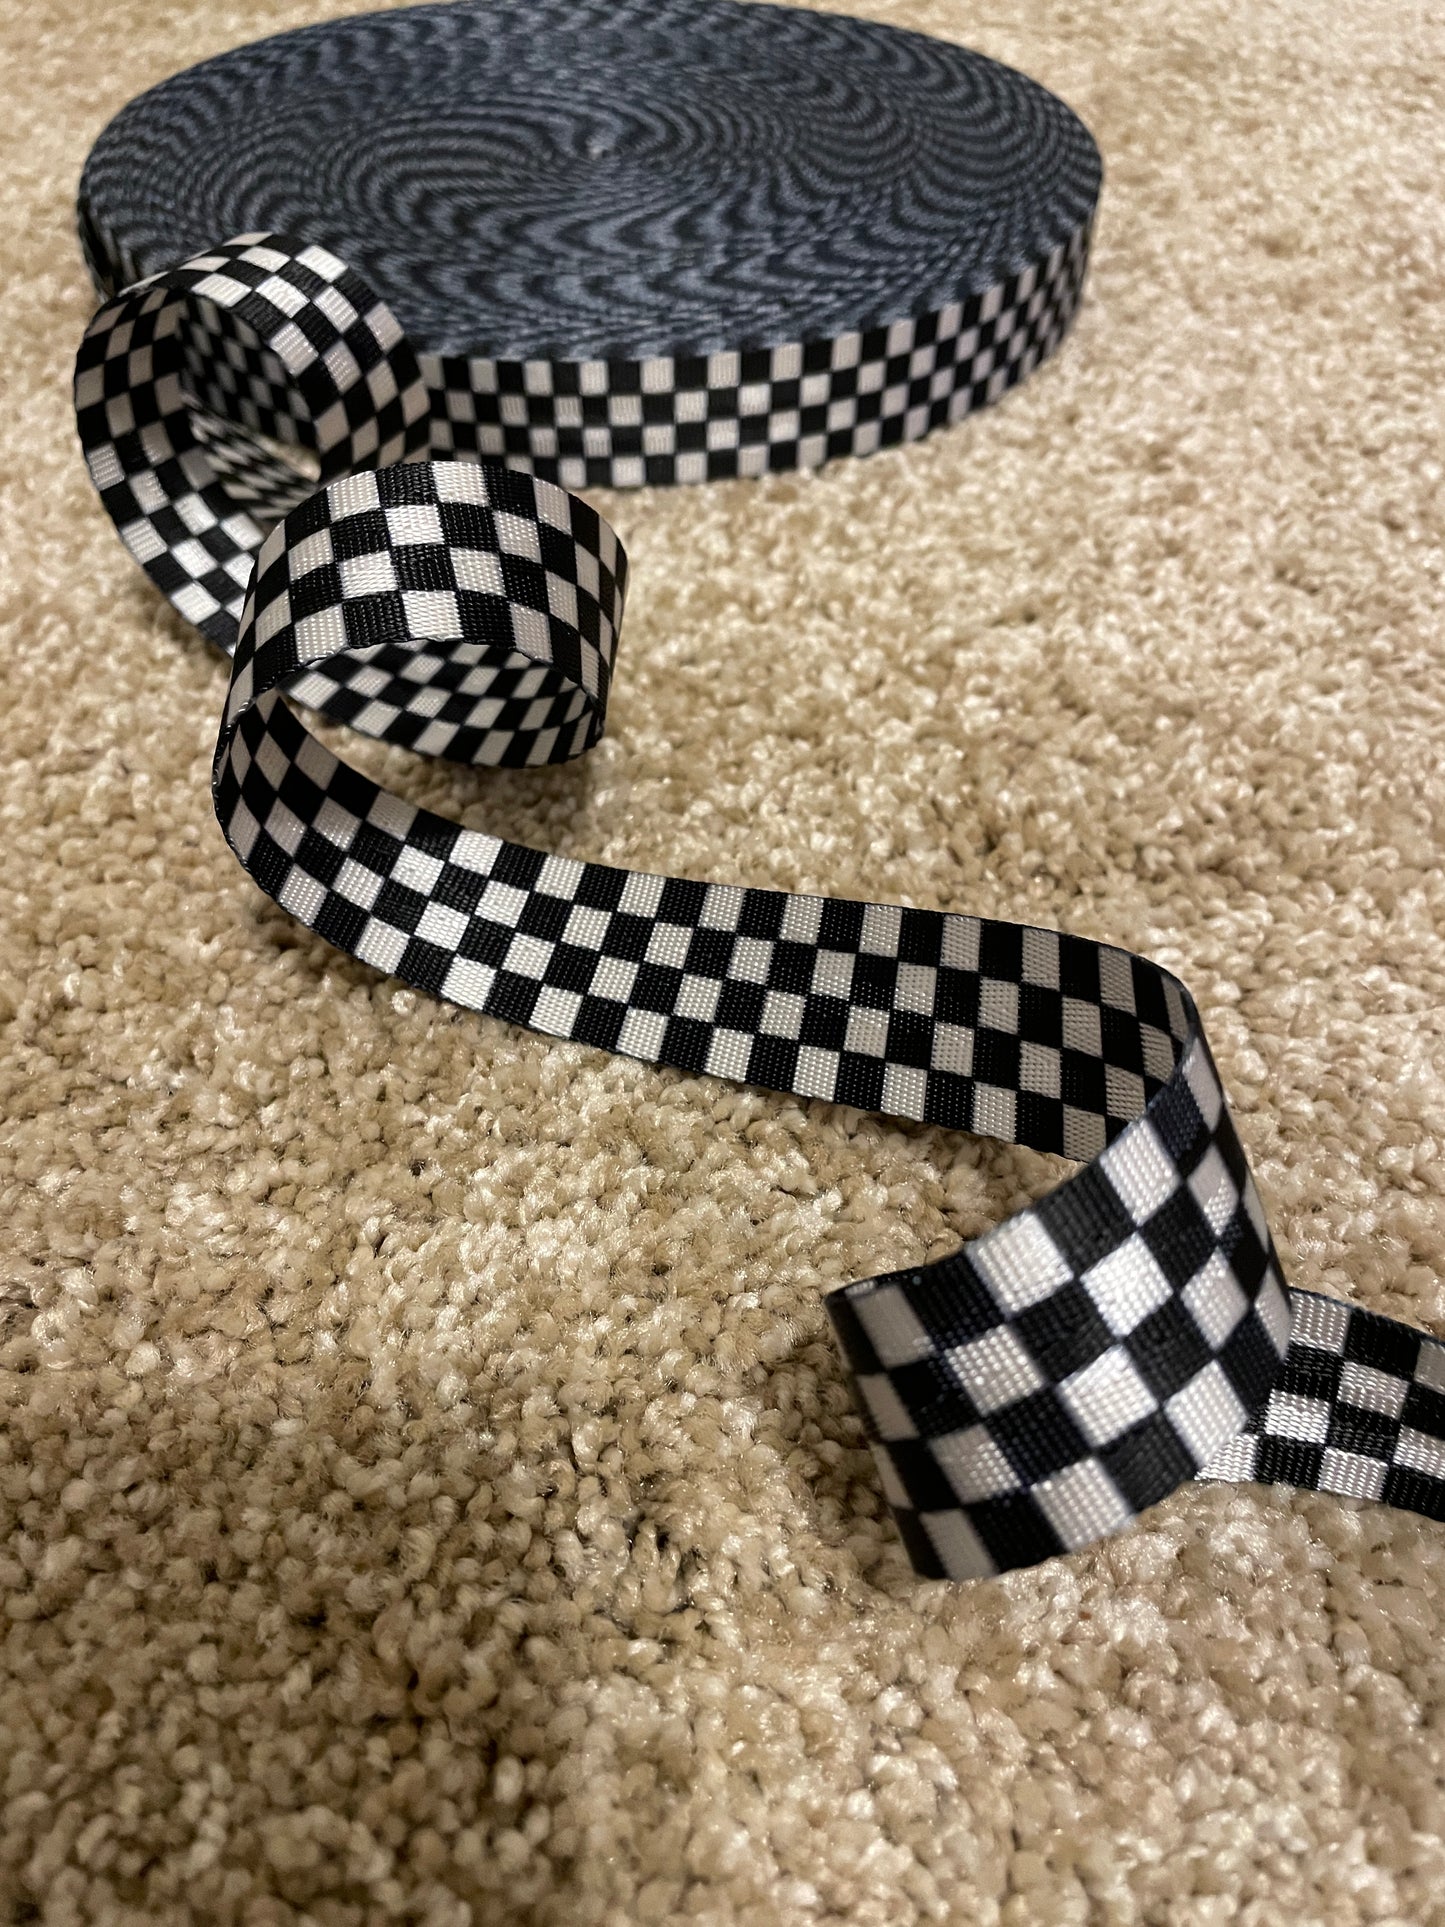 Checkered webbing black & white Seatbelt Webbing 1"